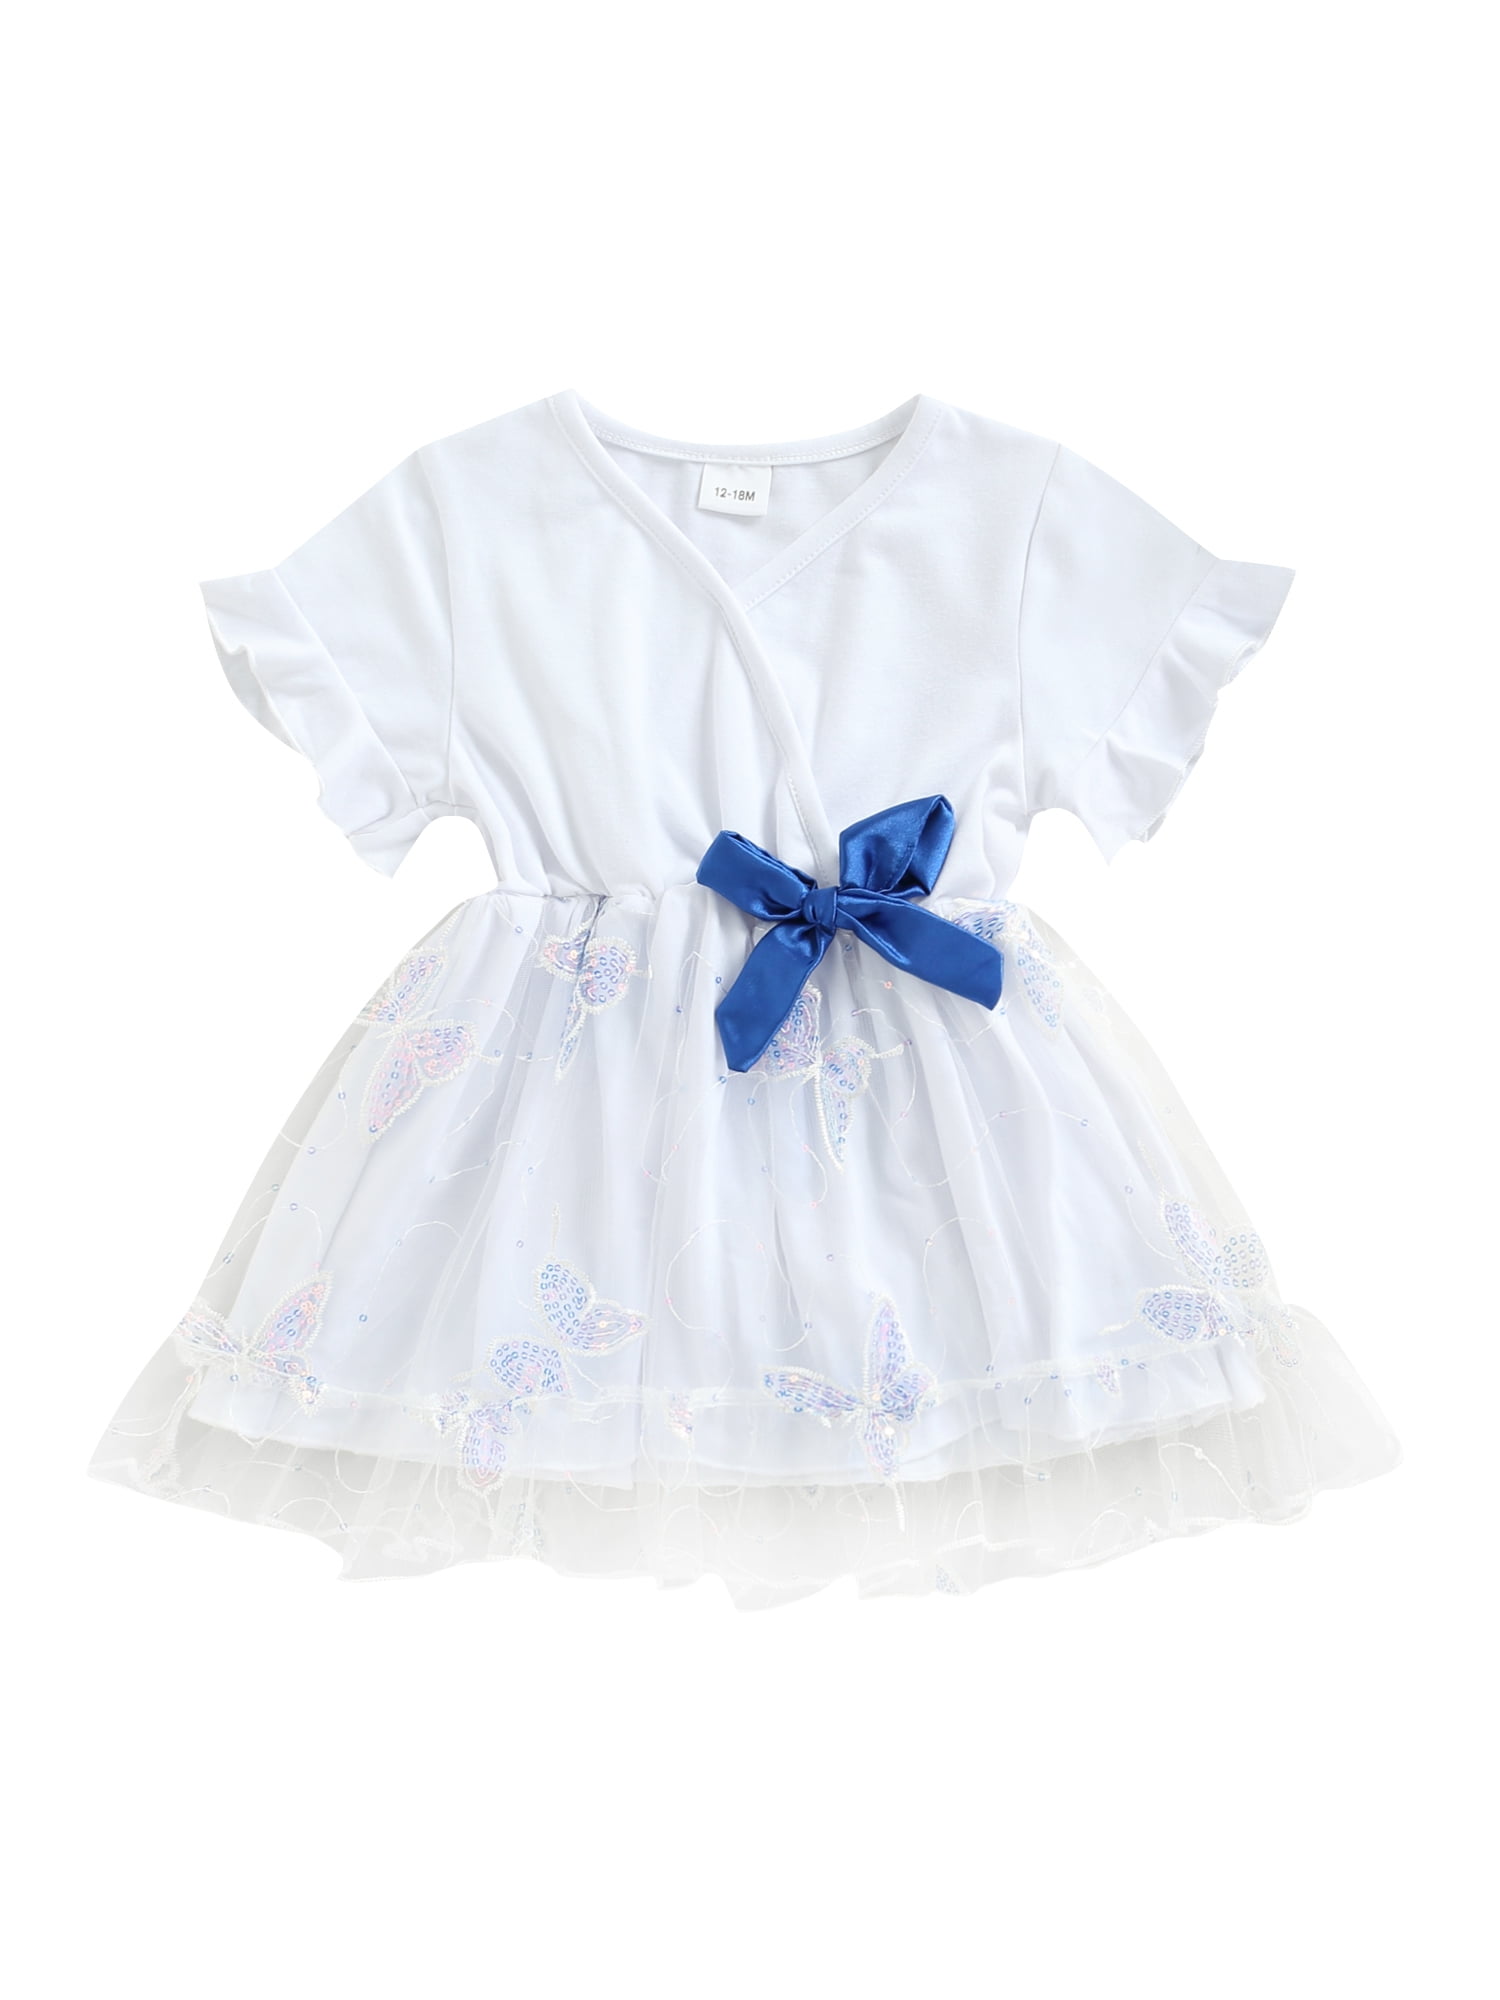 'Aurora' Baby Girls Cream Cotton Lace & Bow Dress Ages 3-6 6-9 & 9-12 Months 